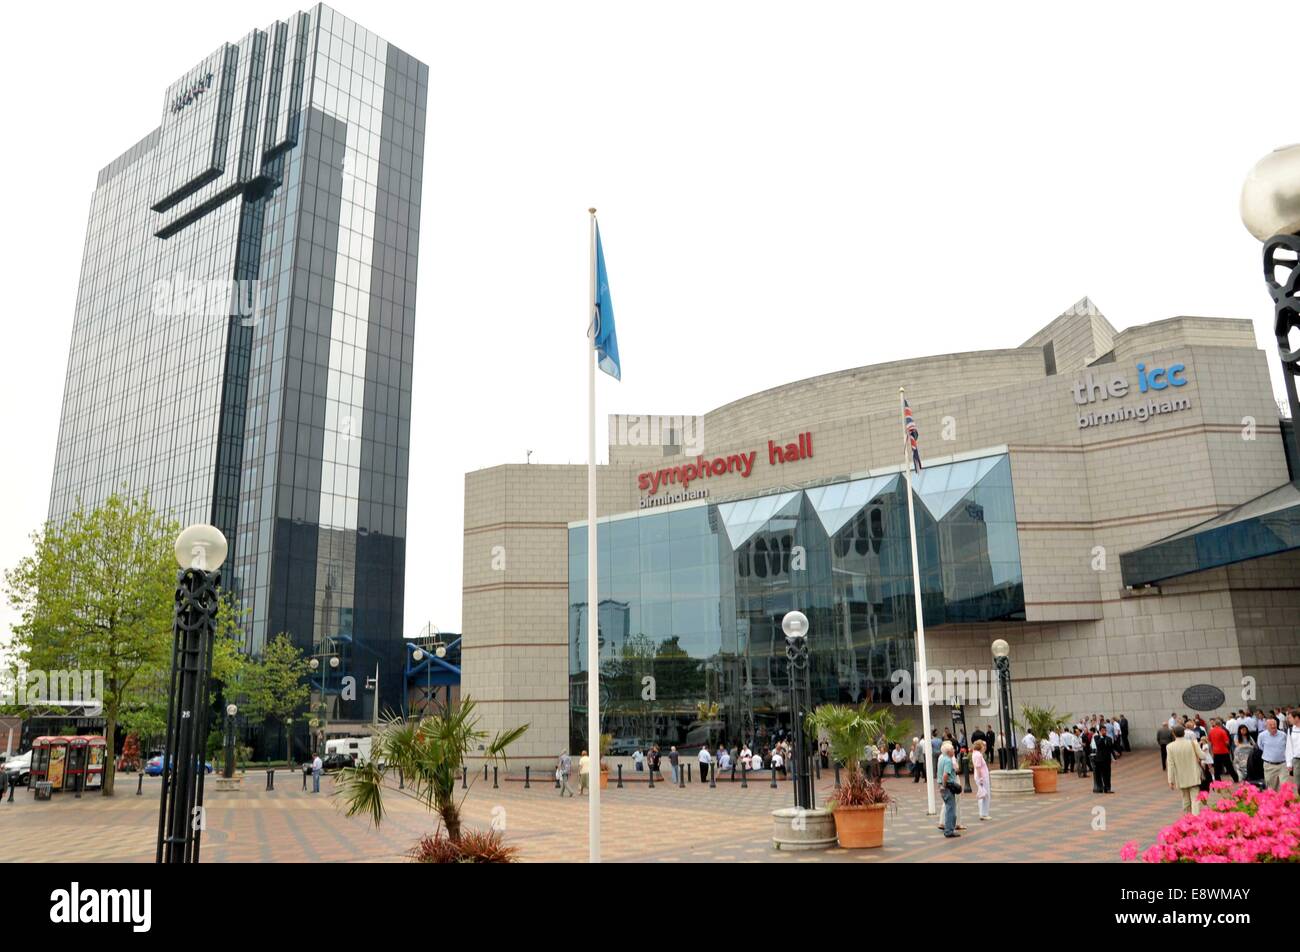 ICC (International Convention Centre) in Birmingham. Stock Photo